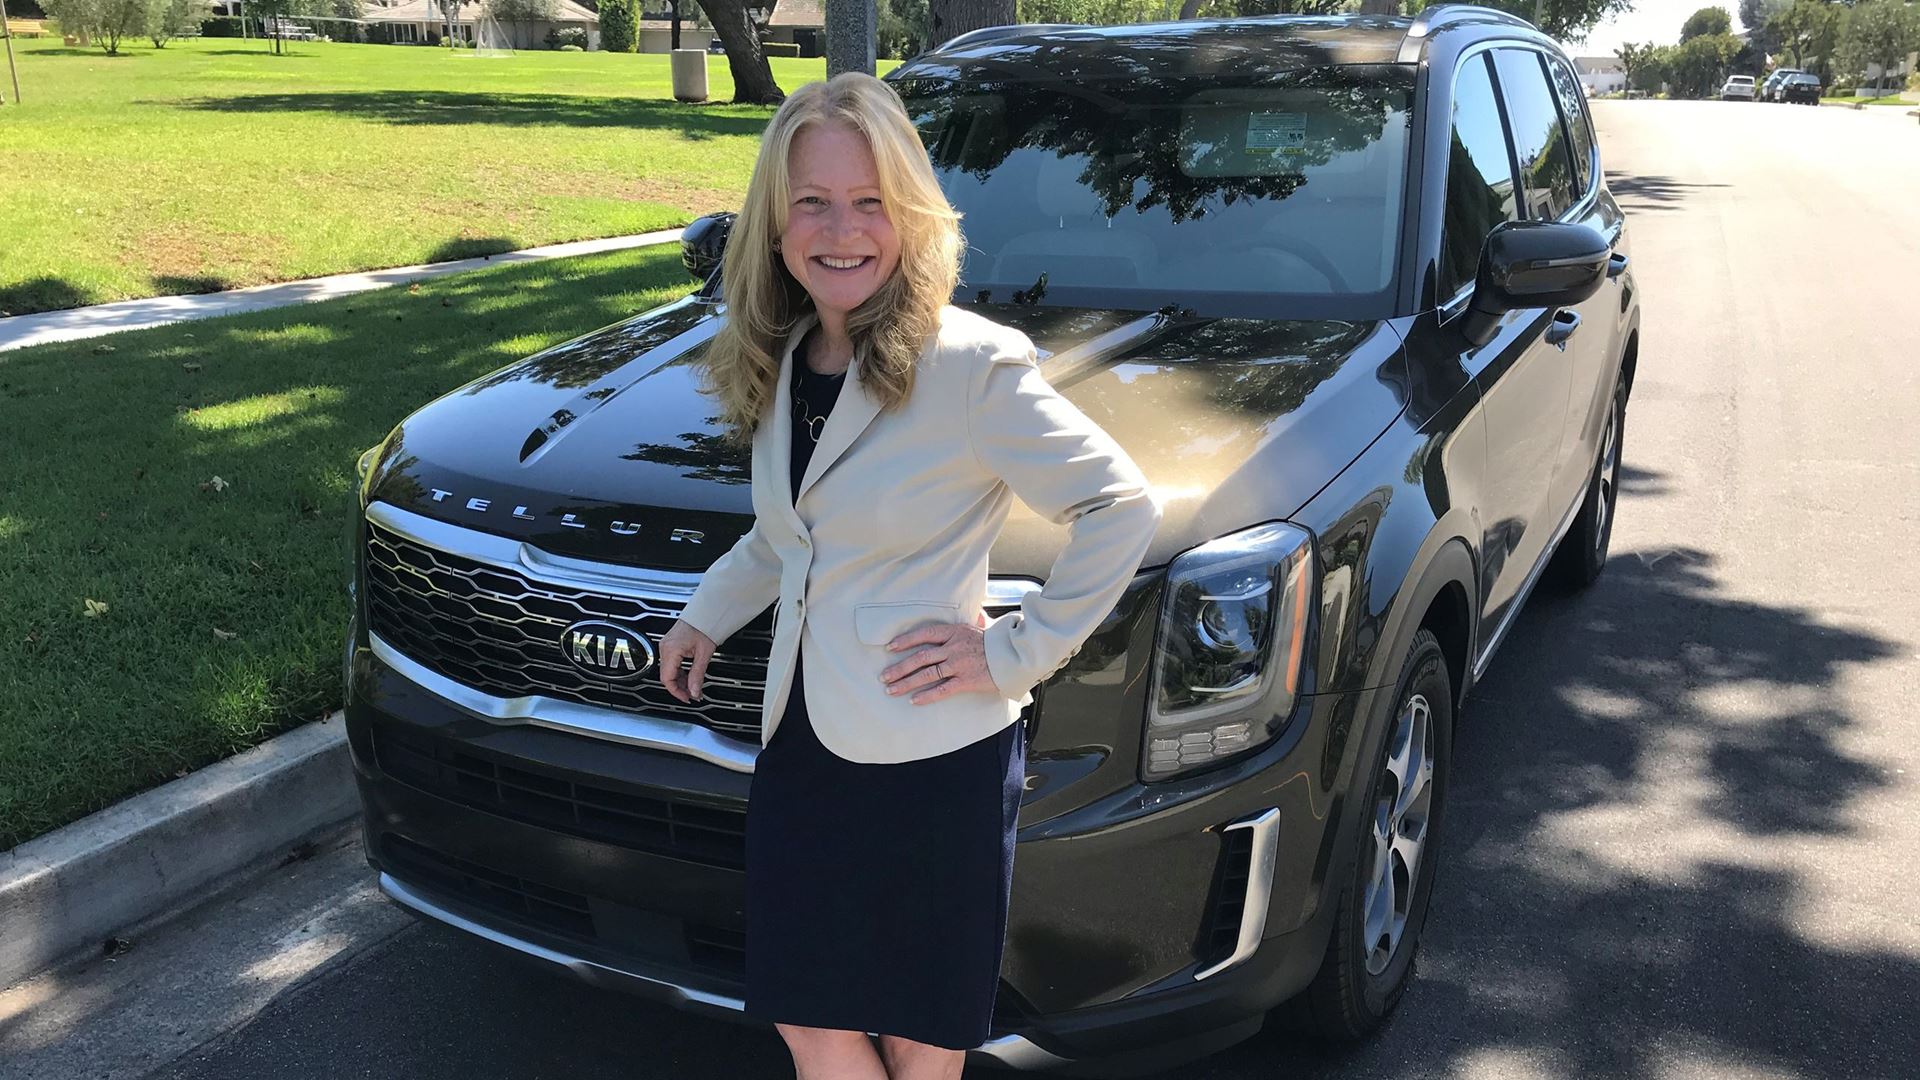 Julie Kurcz, Executive Director of Product Quality for Kia Motors America